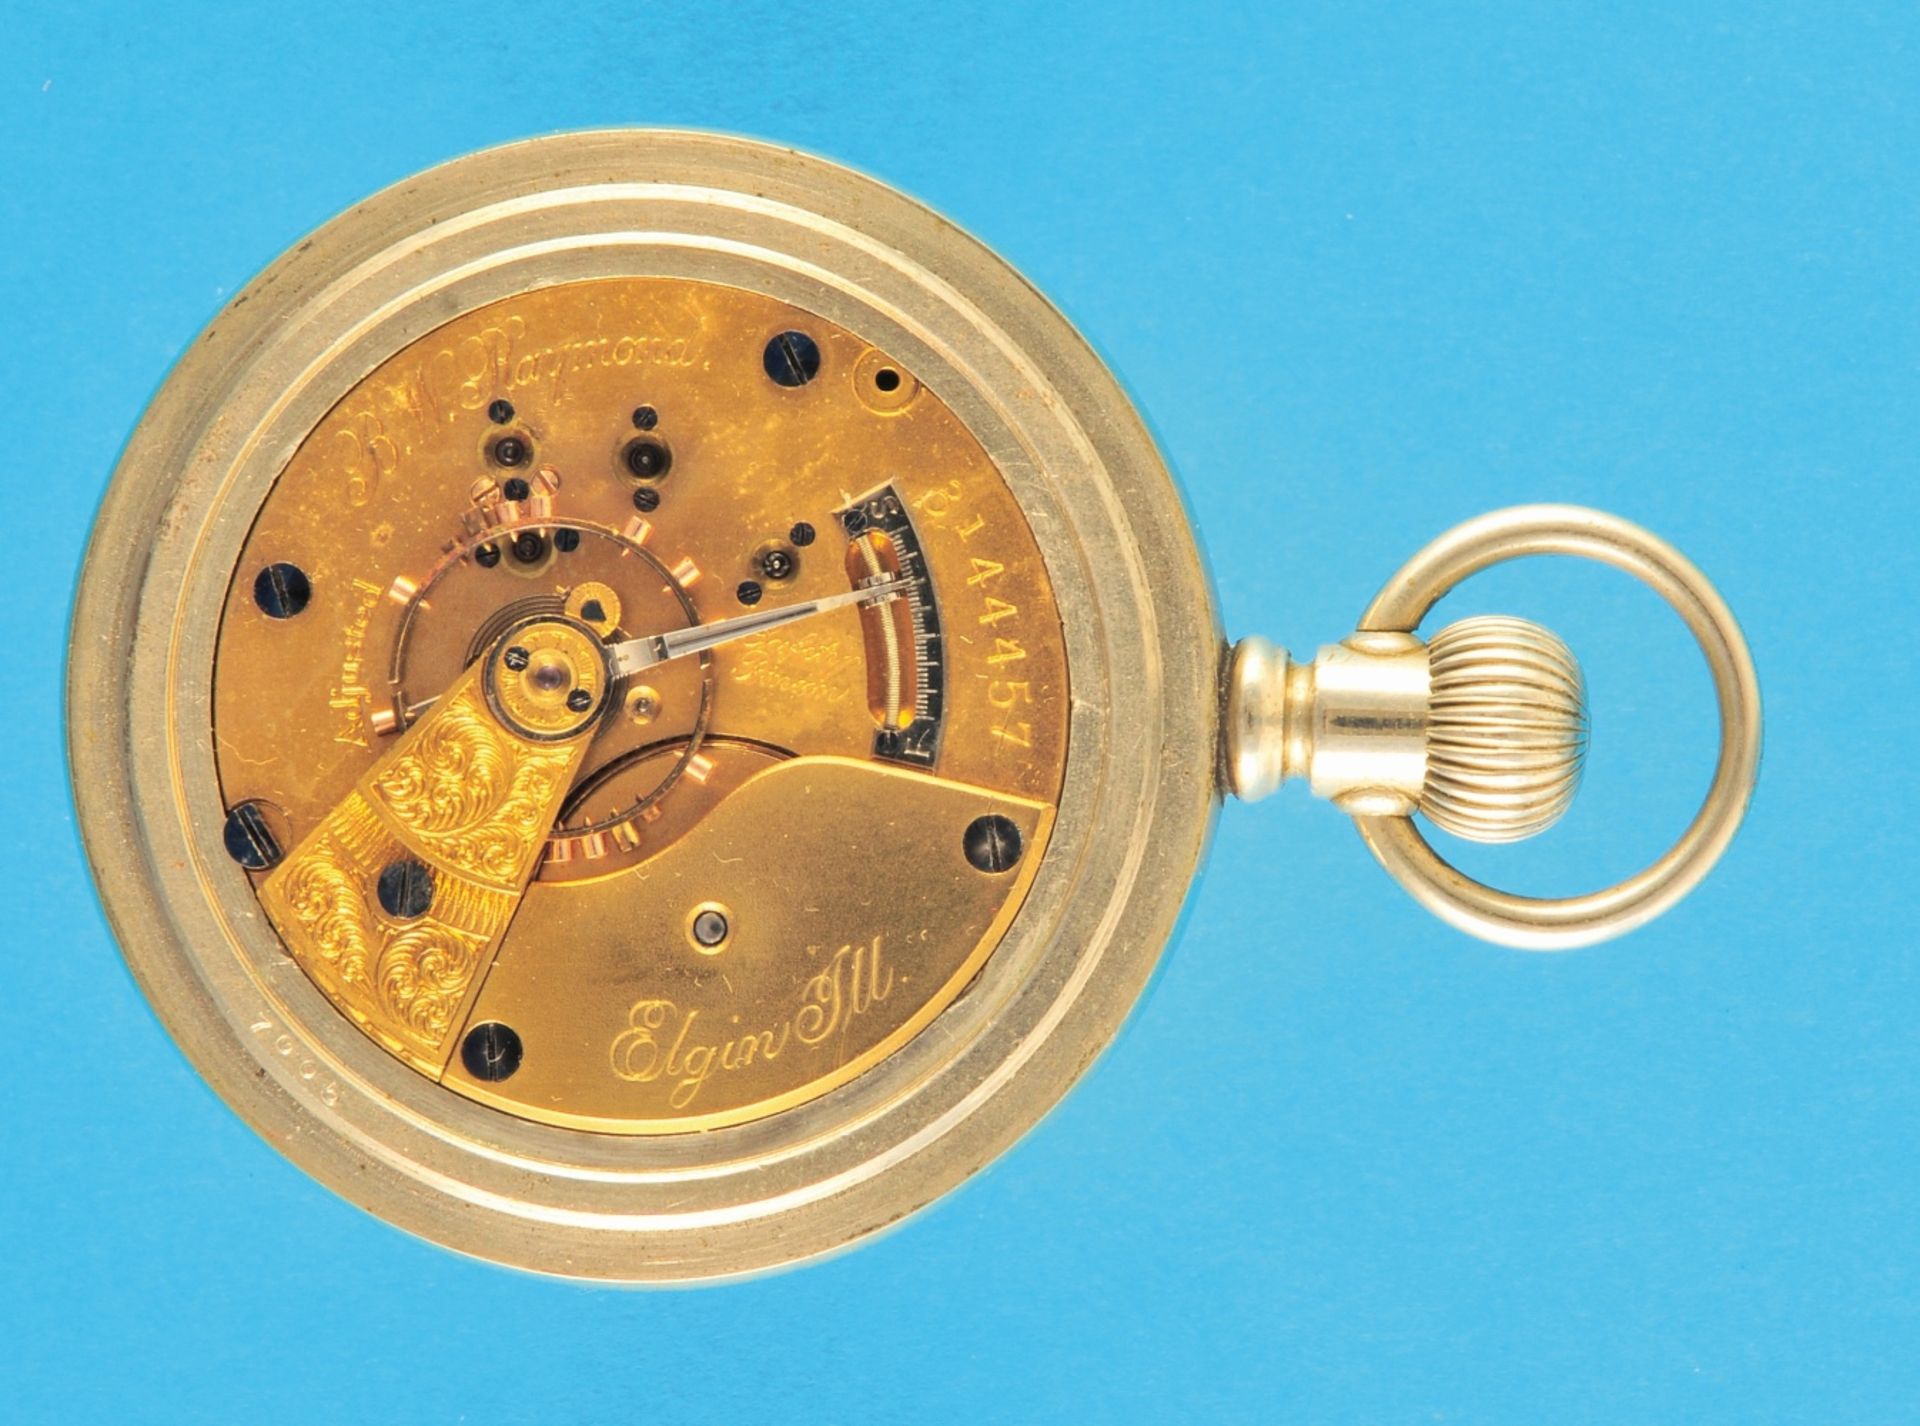 Big metal pocket watch, Elgin Natl. Watch Co. Illinois, USA, B. W. Raymond